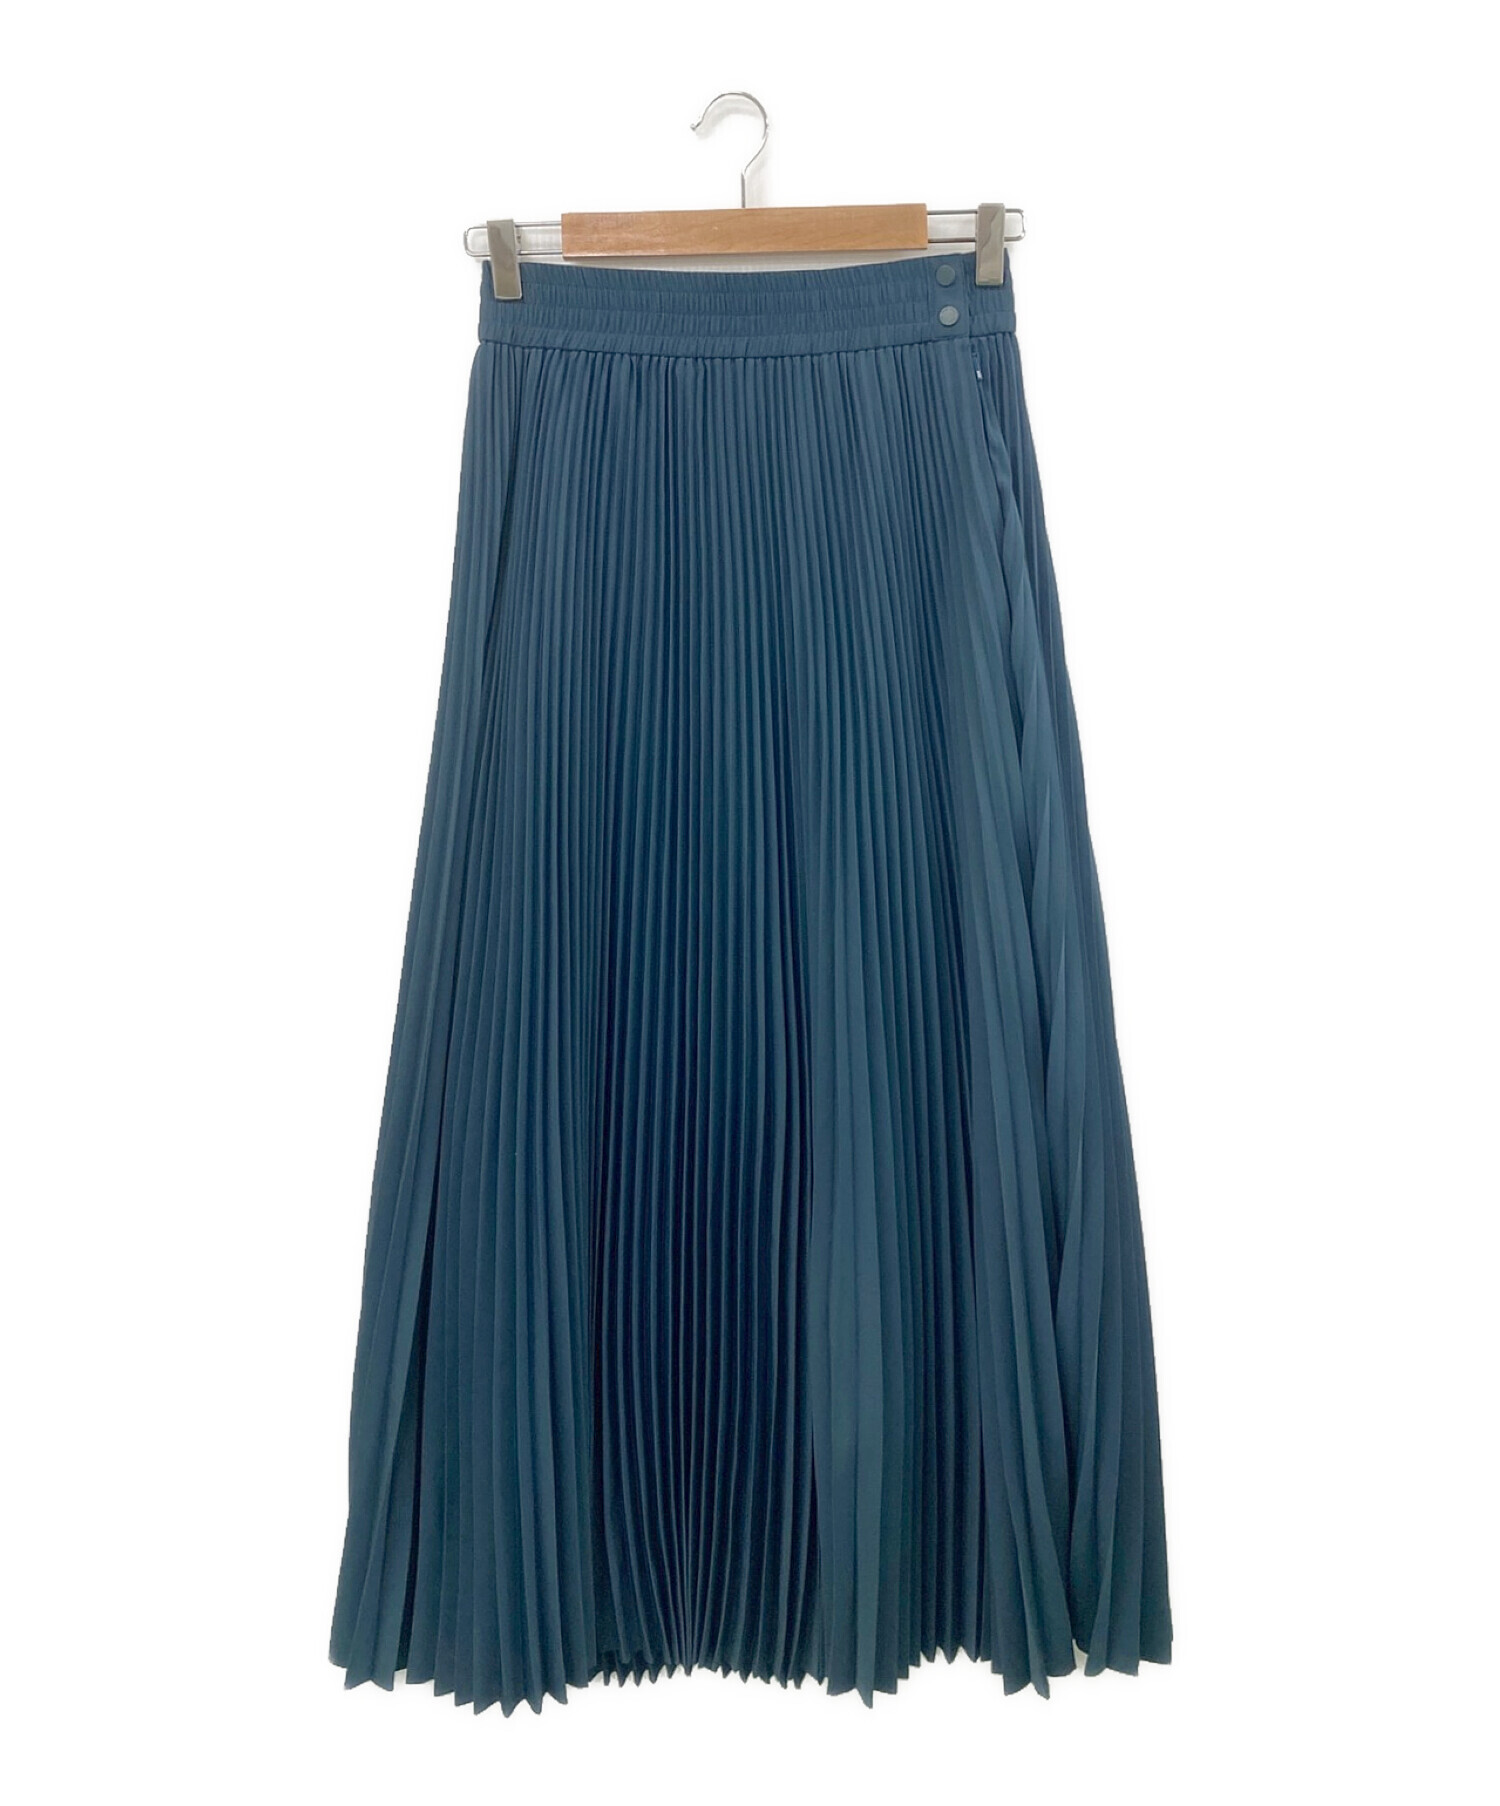 【fashiru】 taffeta pleated skirt 新品/未使用